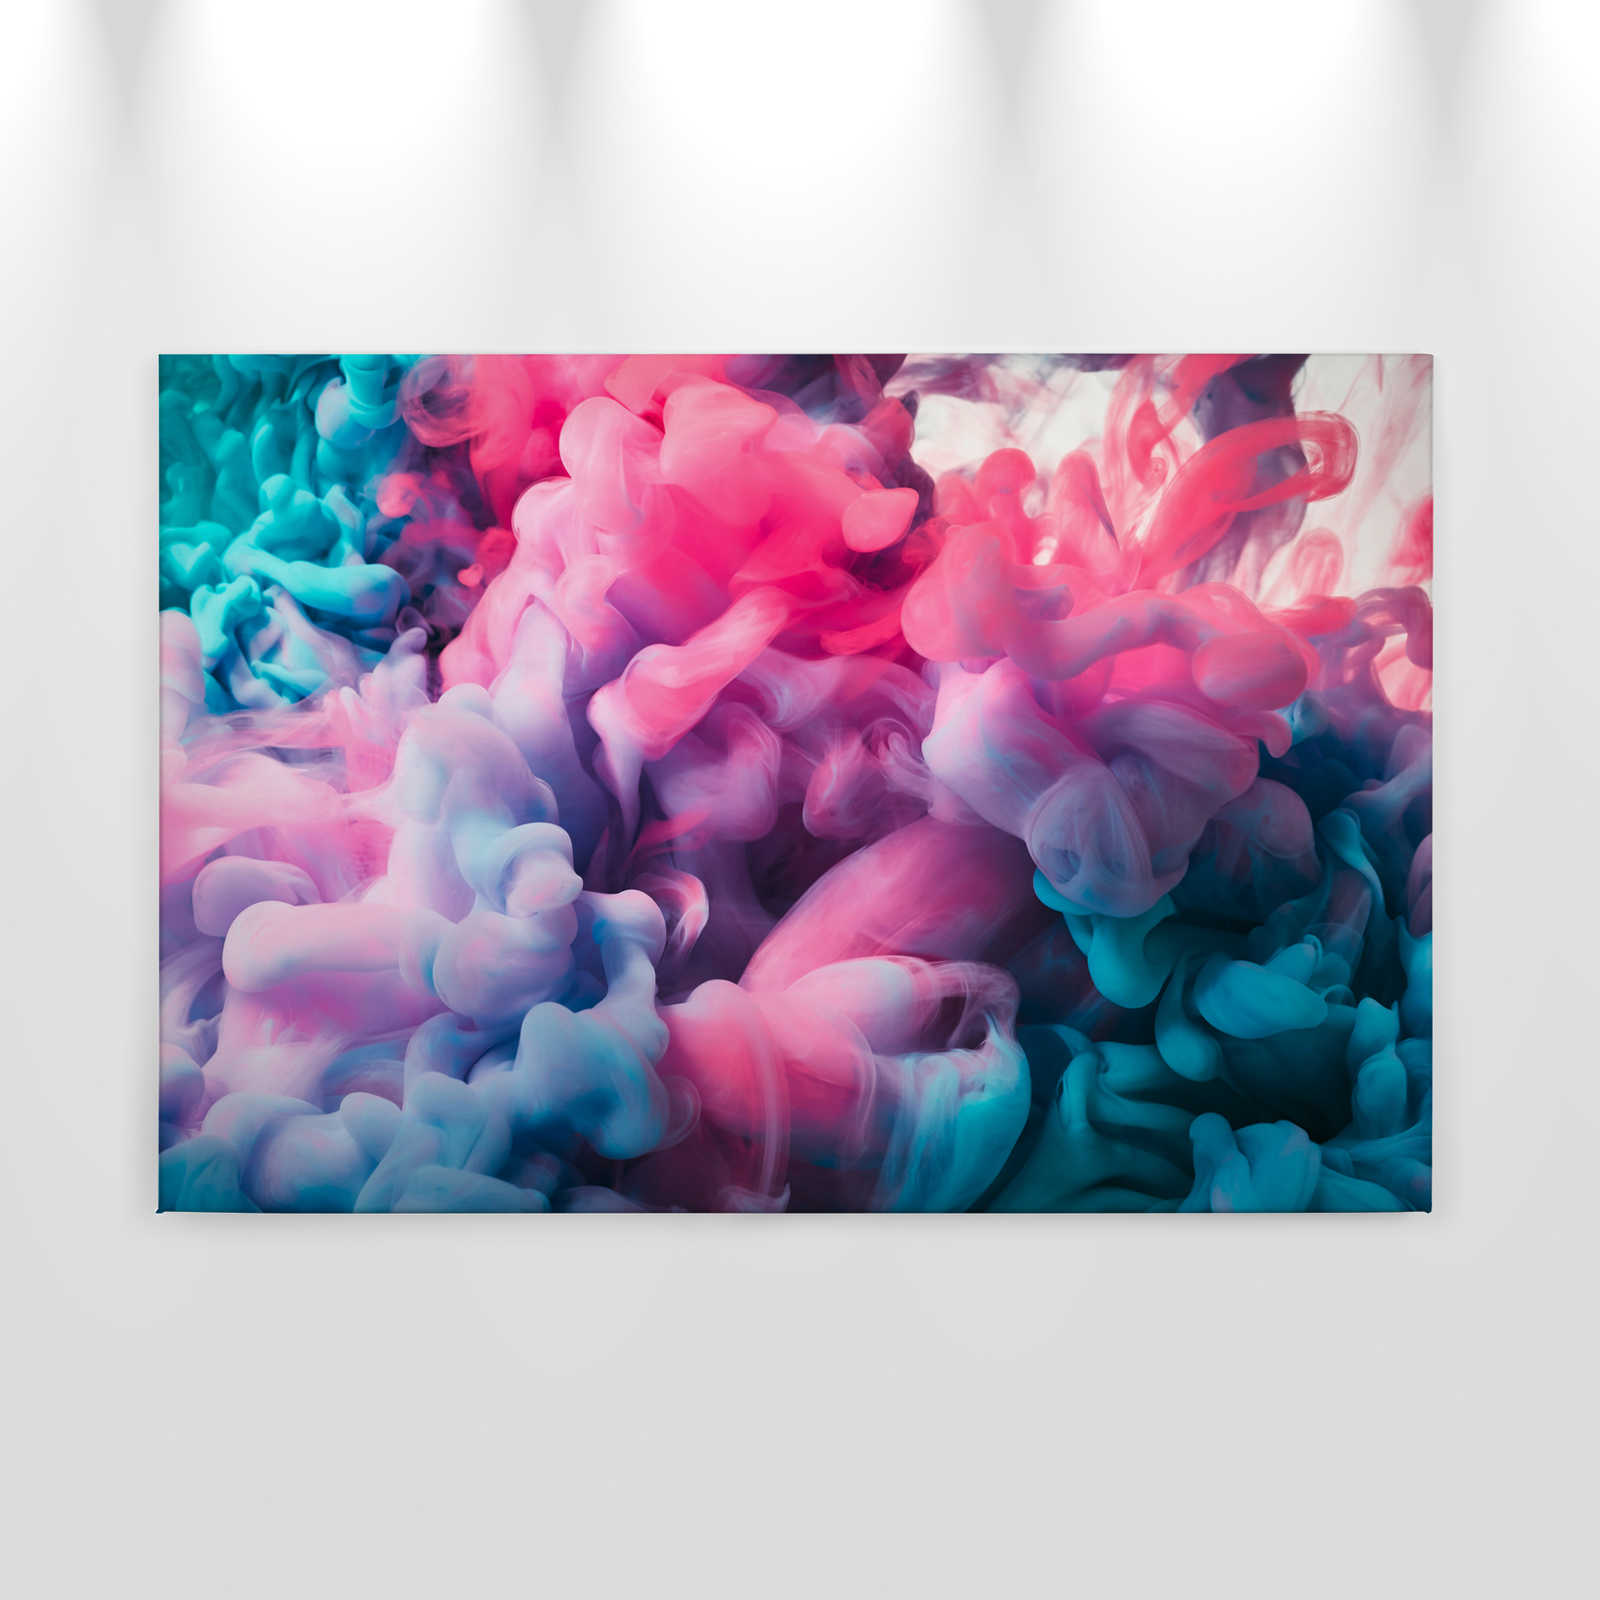             Farbiger Rauch Leinwand |Rosa, Blau, Weiß – 0,90 m x 0,60 m
        